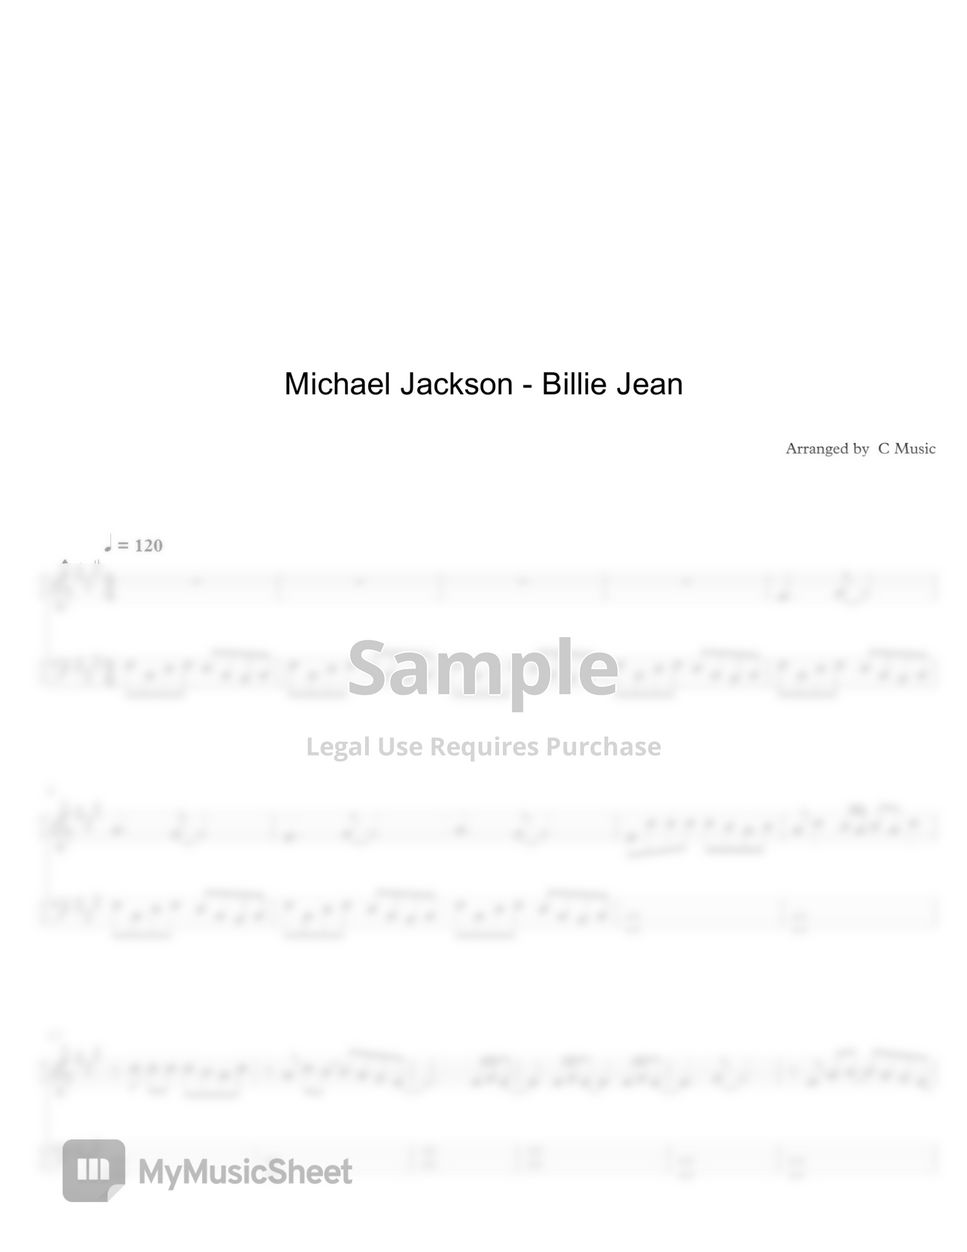 Michael Jackson - Billie Jean by C Music